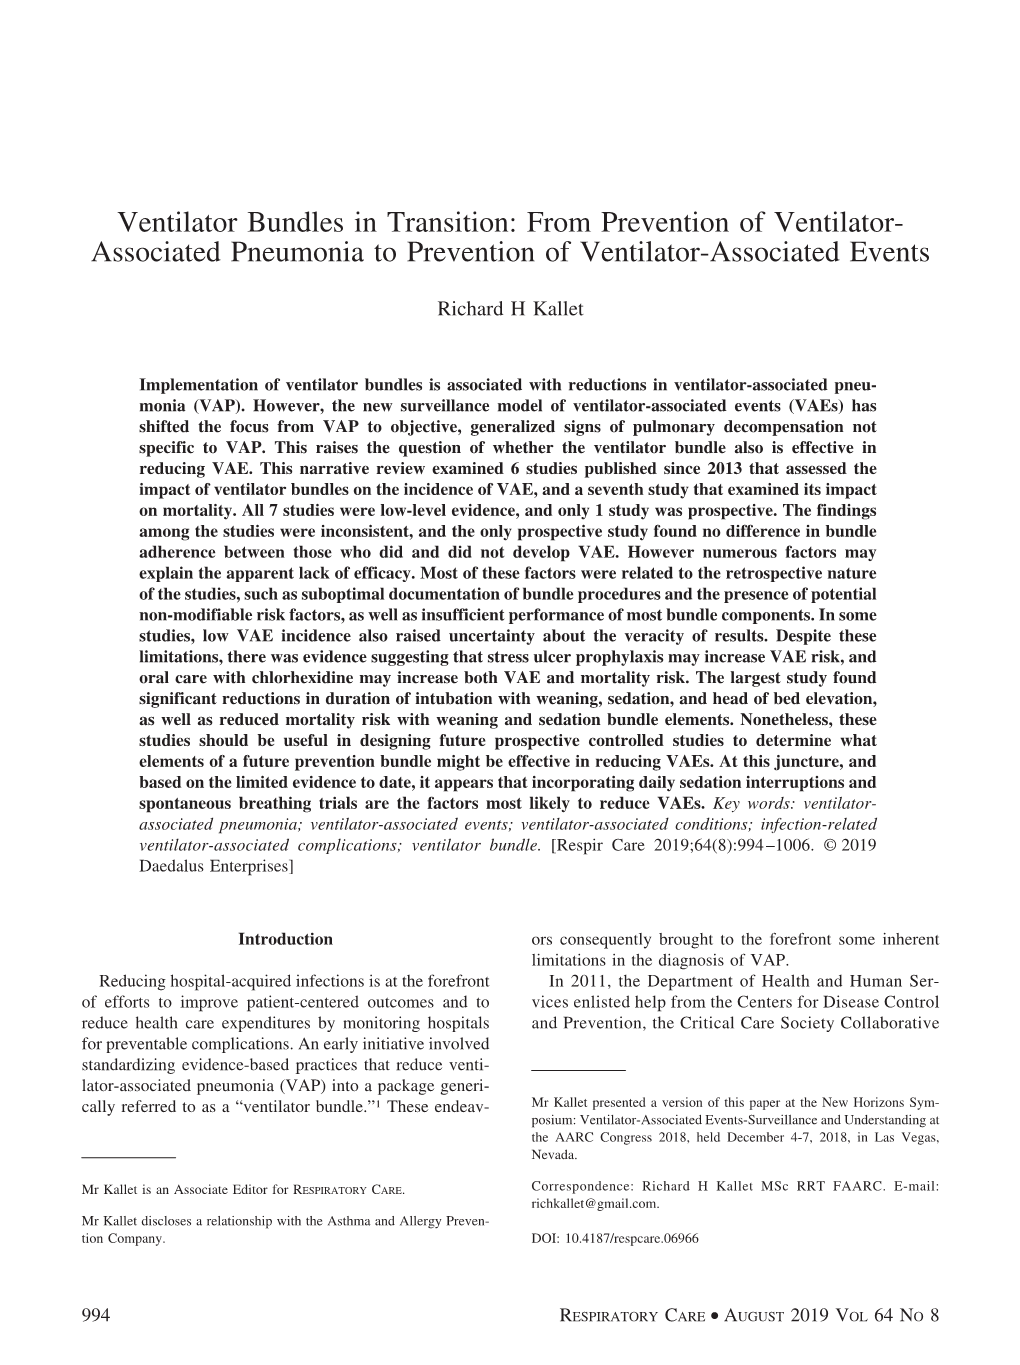 Ventilator Bundles in Transition: from Prevention of Ventilator-Associated